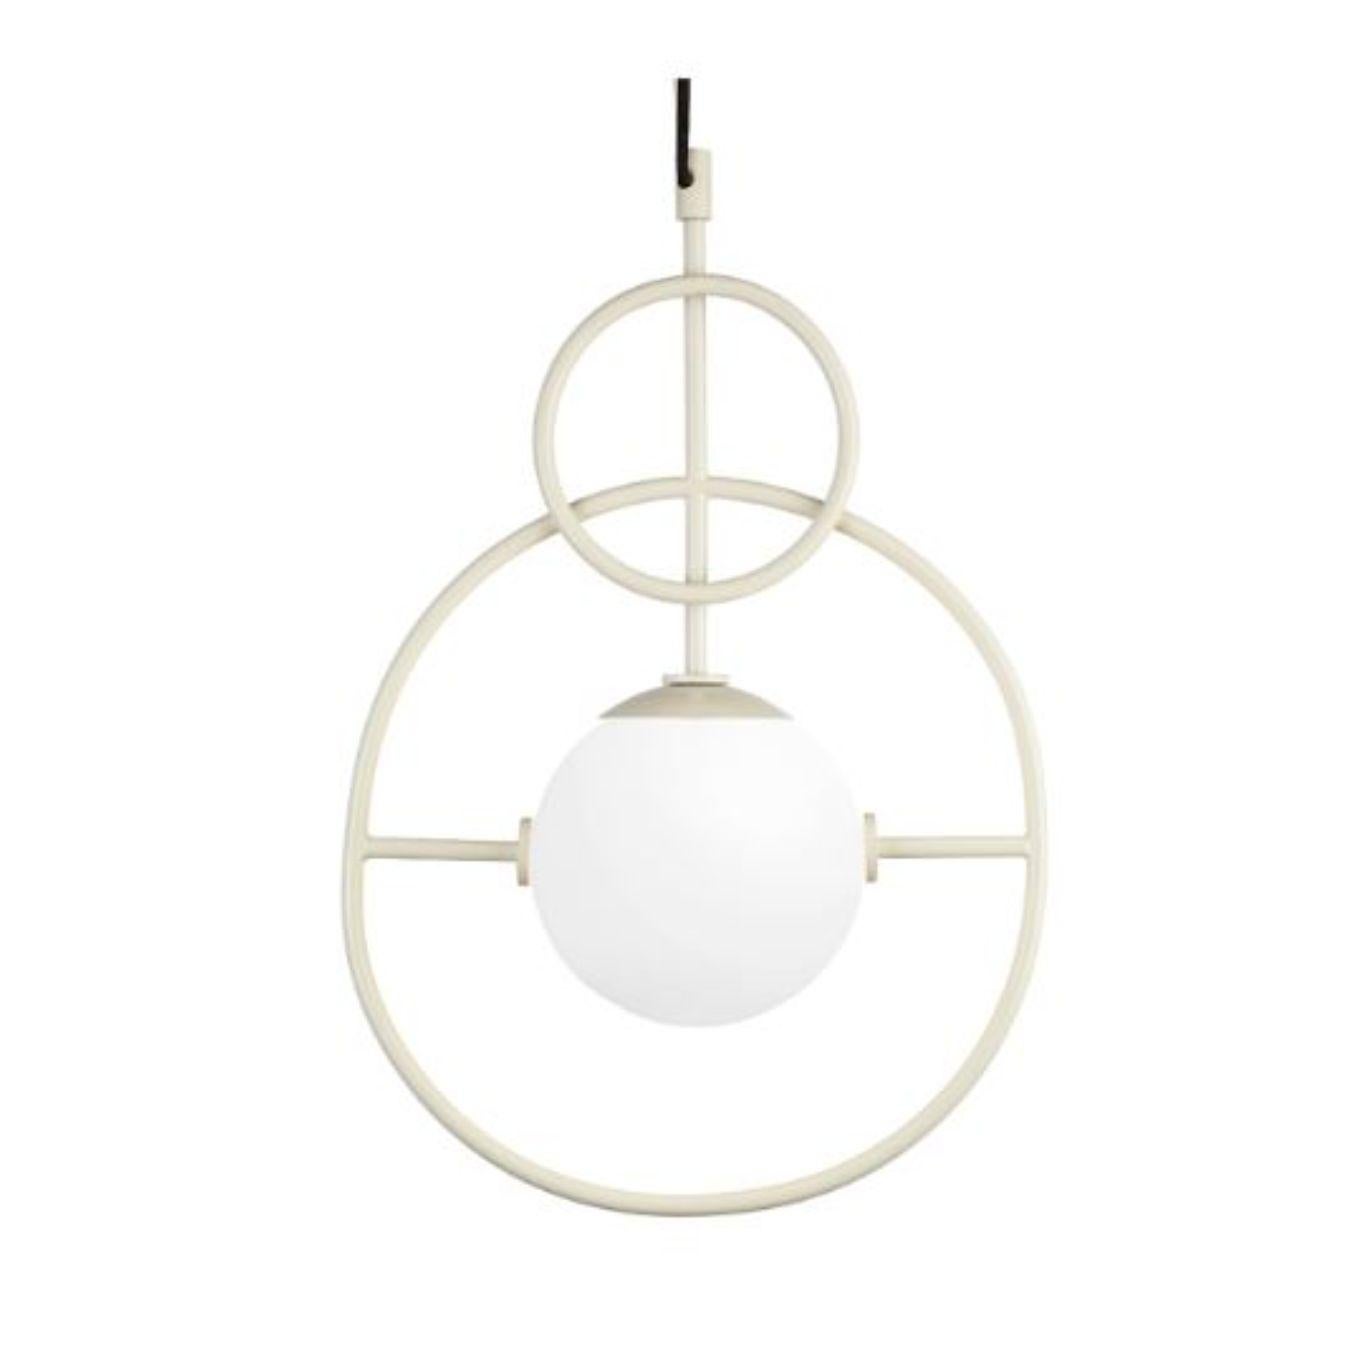 Metal Copper Loop II Suspension Lamp by Dooq For Sale